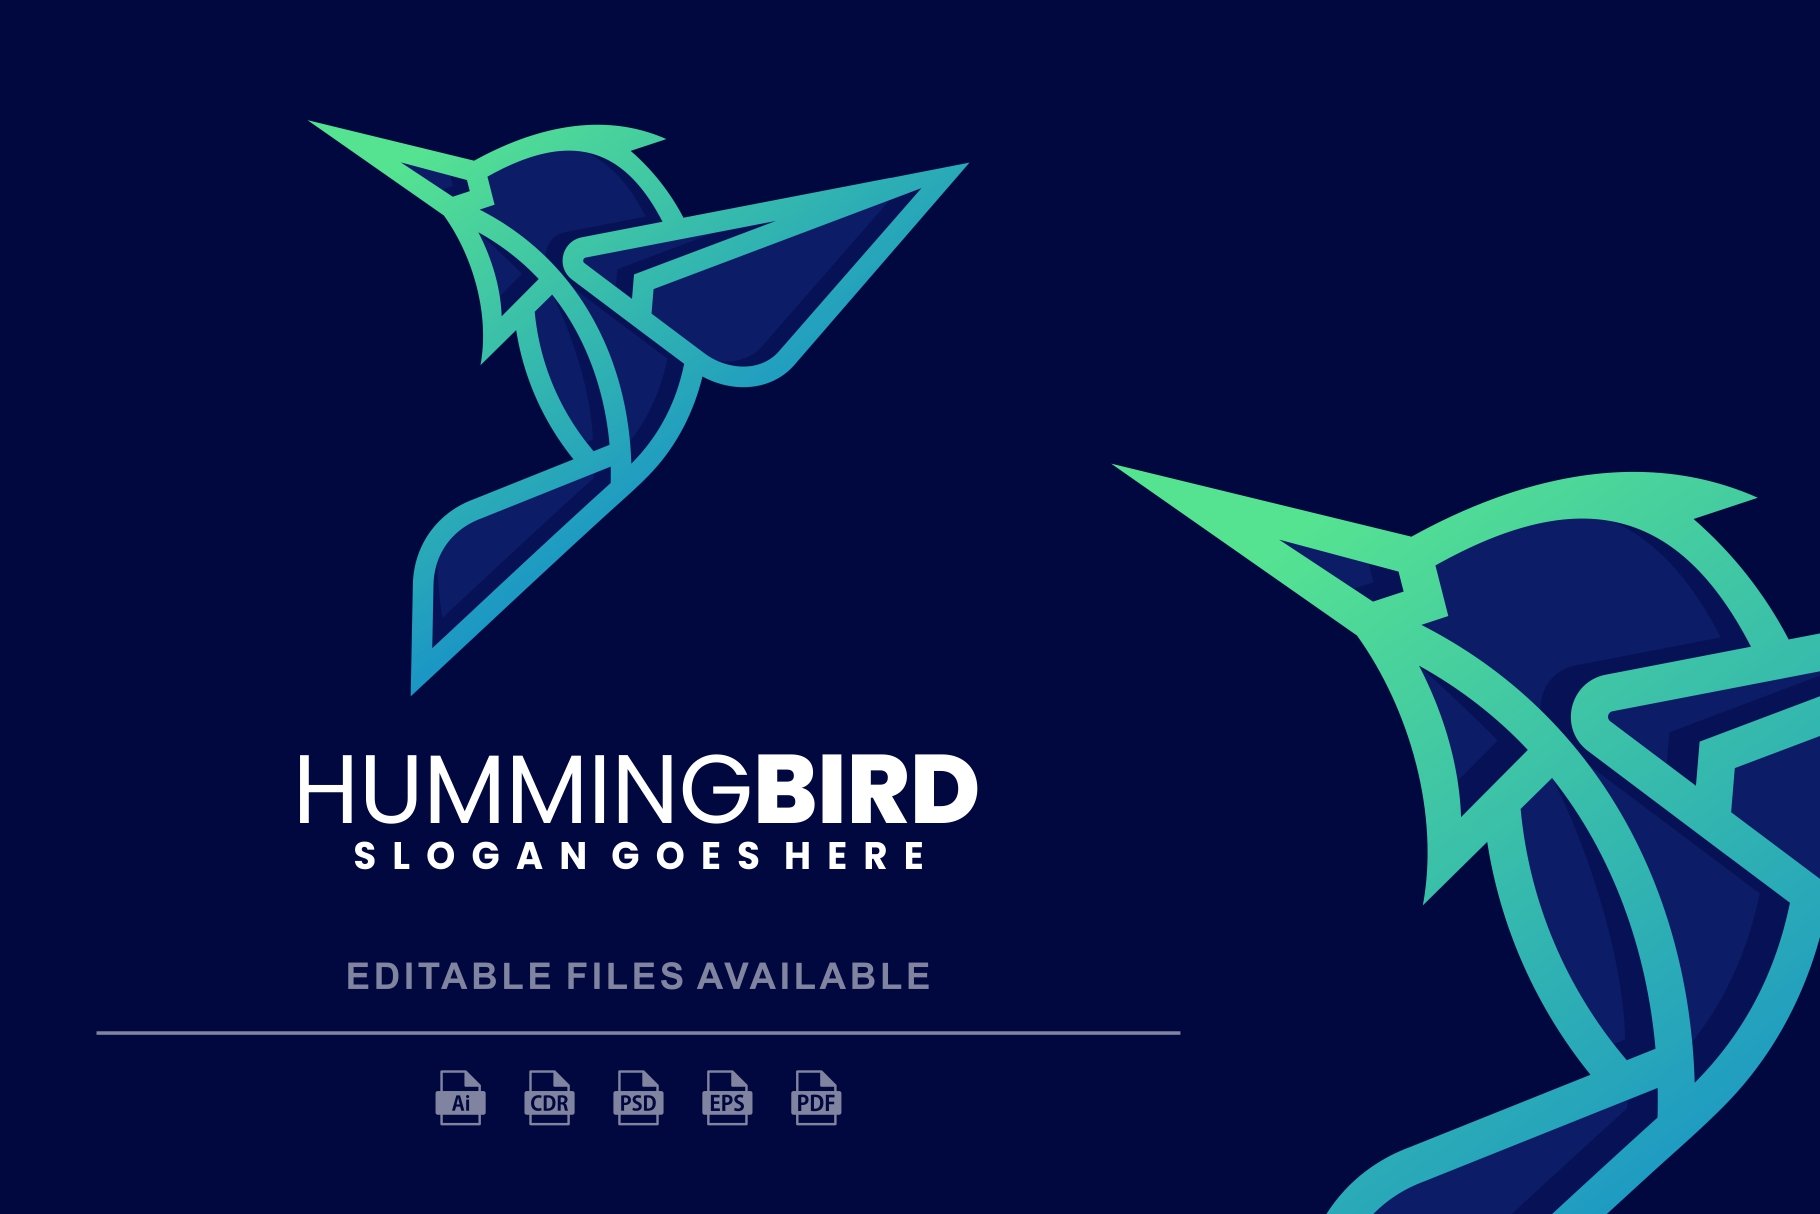 Hummingbird Line Art Logo cover image.